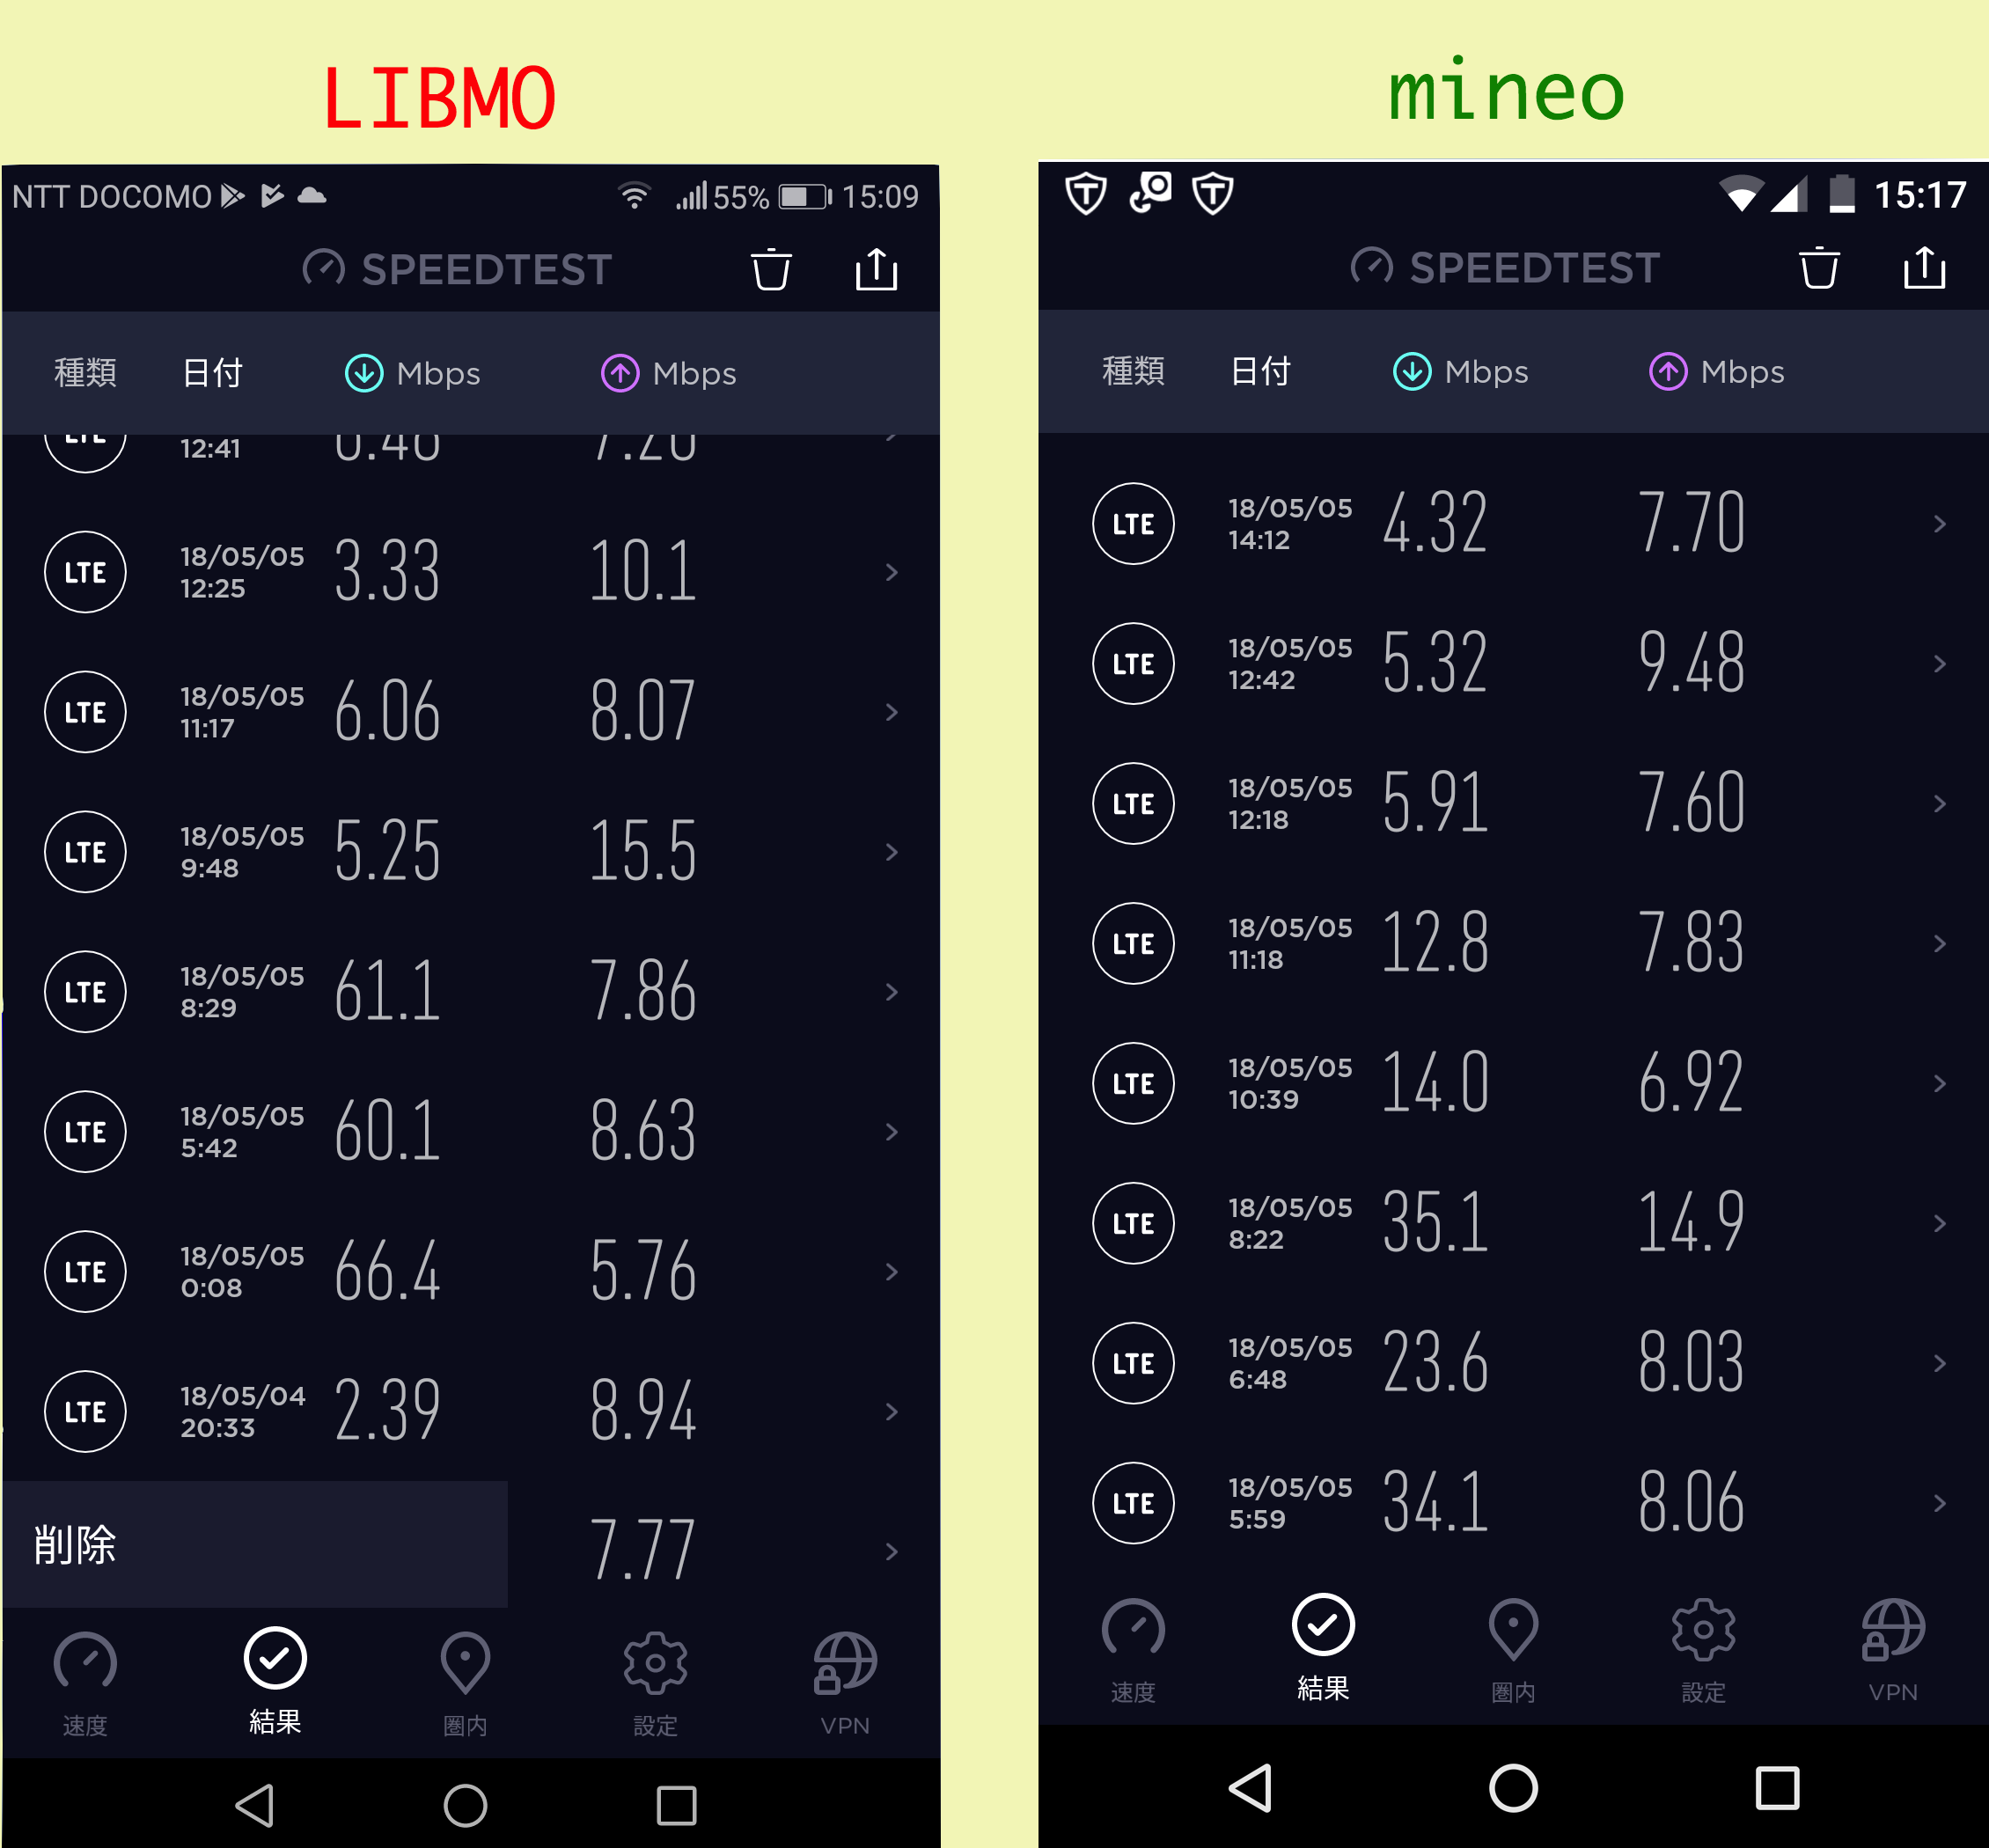 LIBMOとマイネオの通信速度を比較